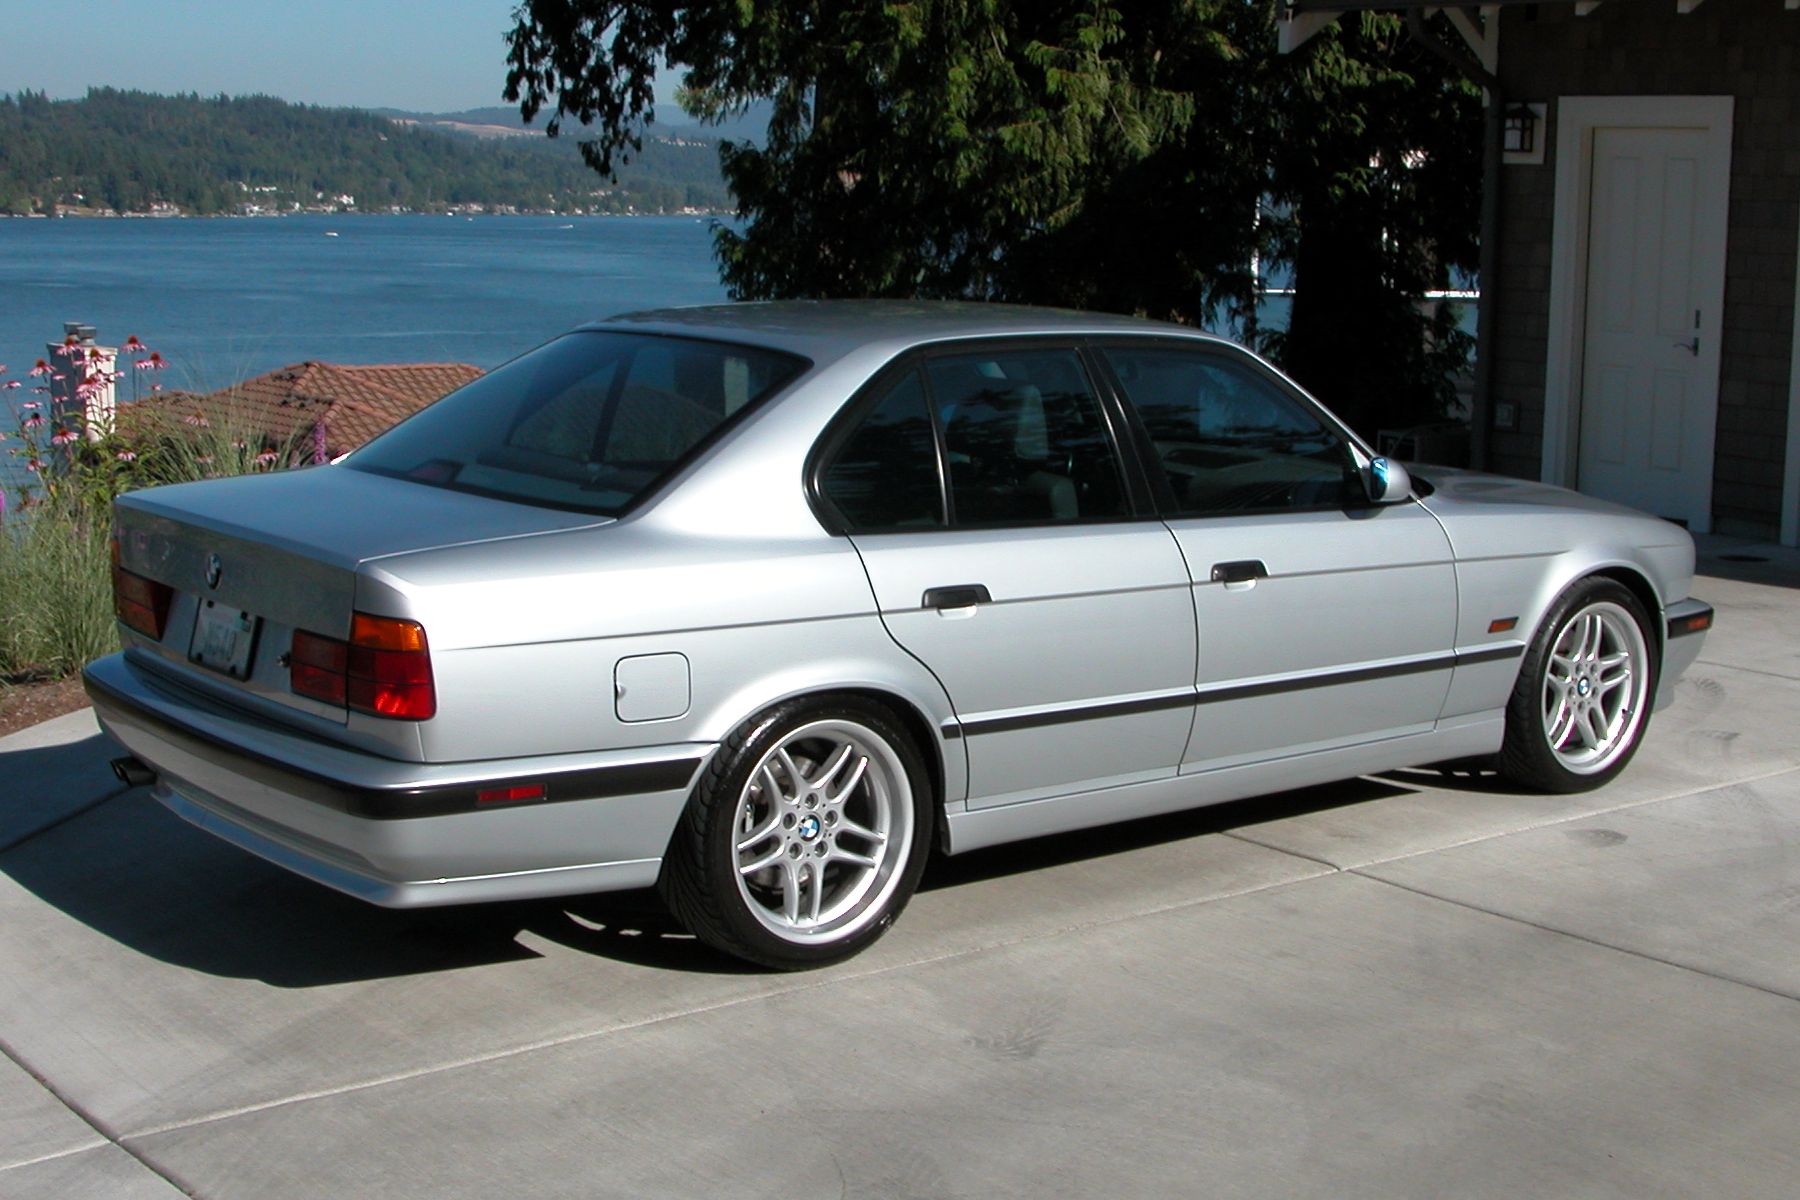 BMW 520d 1999 Photo - 1